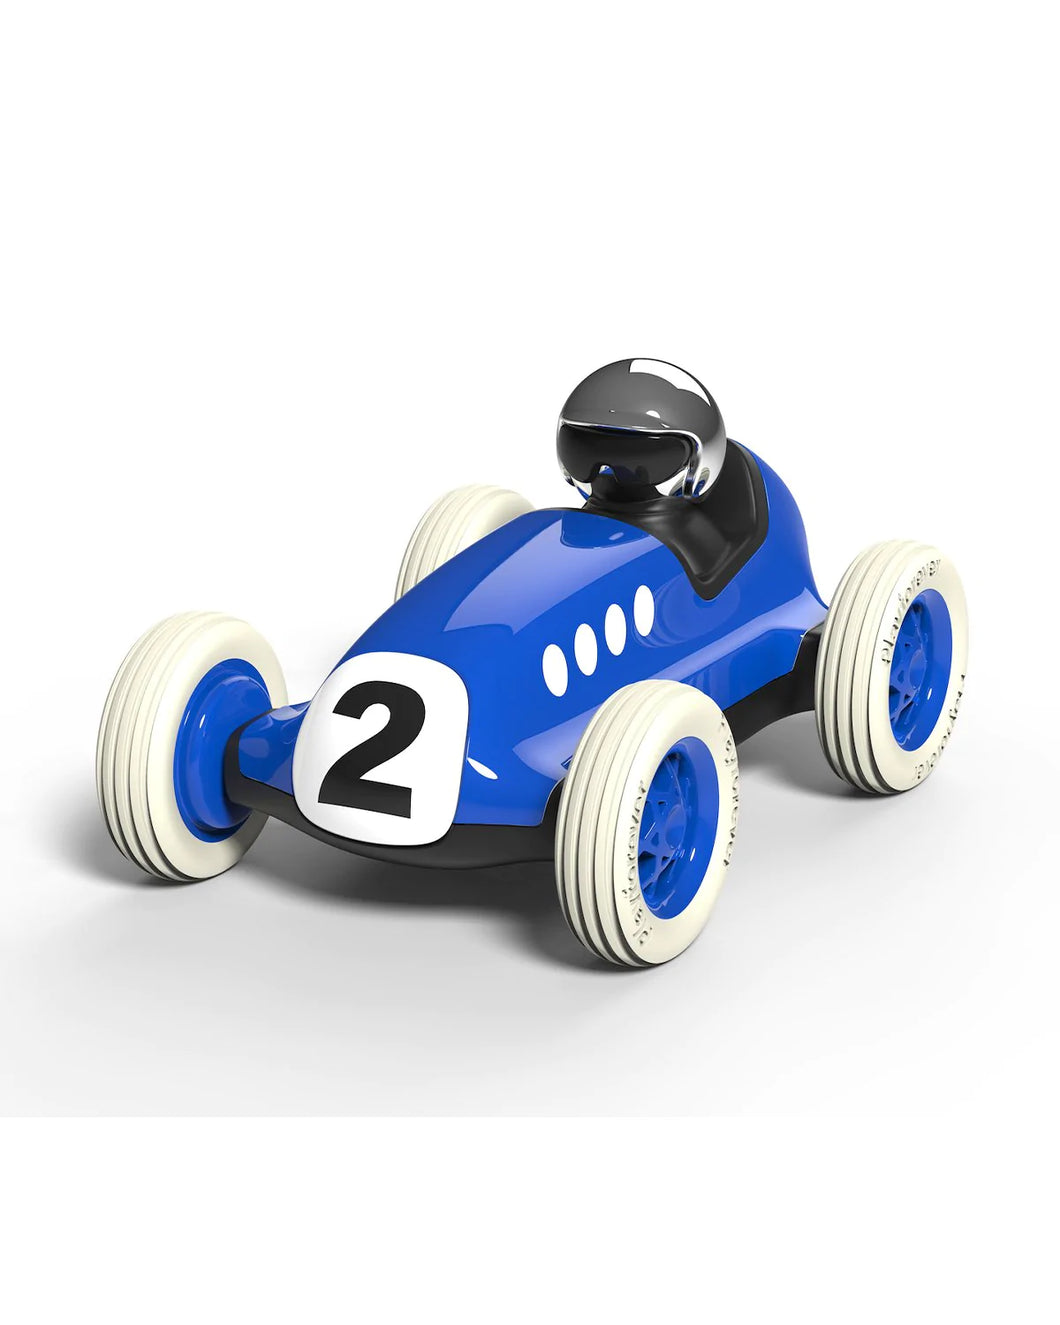 BLUE LORETINO RACECAR